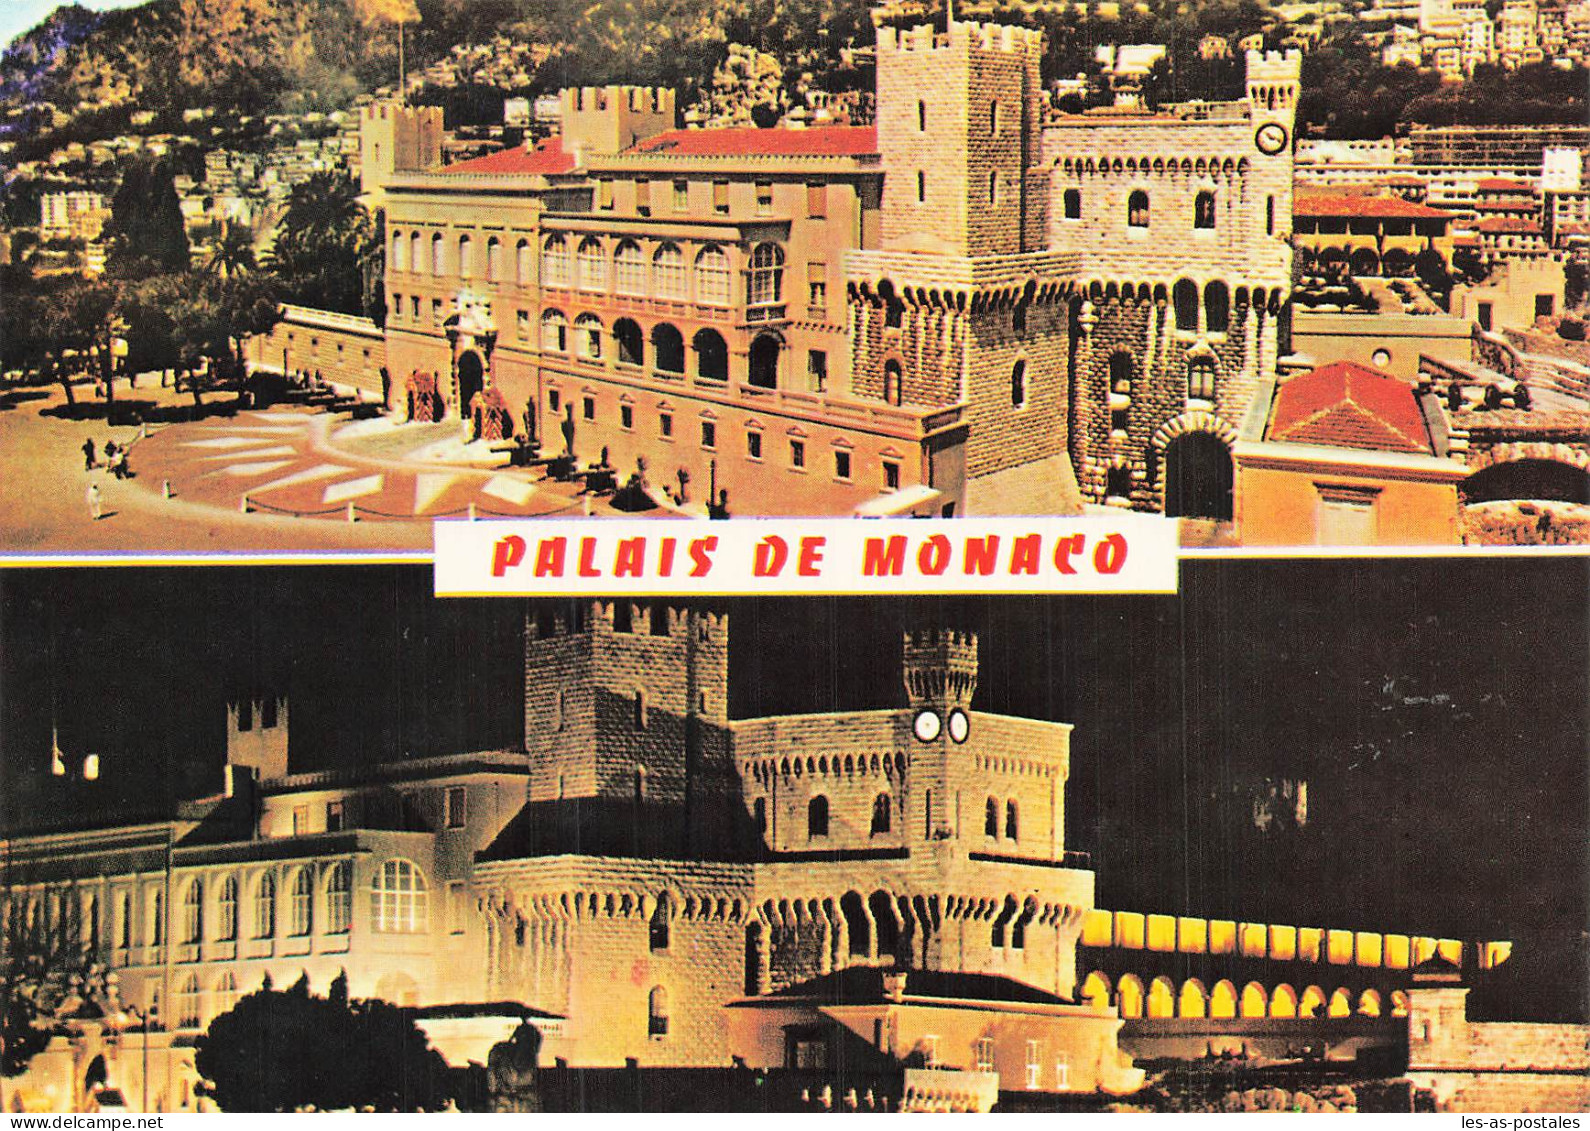 98 MONACO LE PALAIS - Prince's Palace